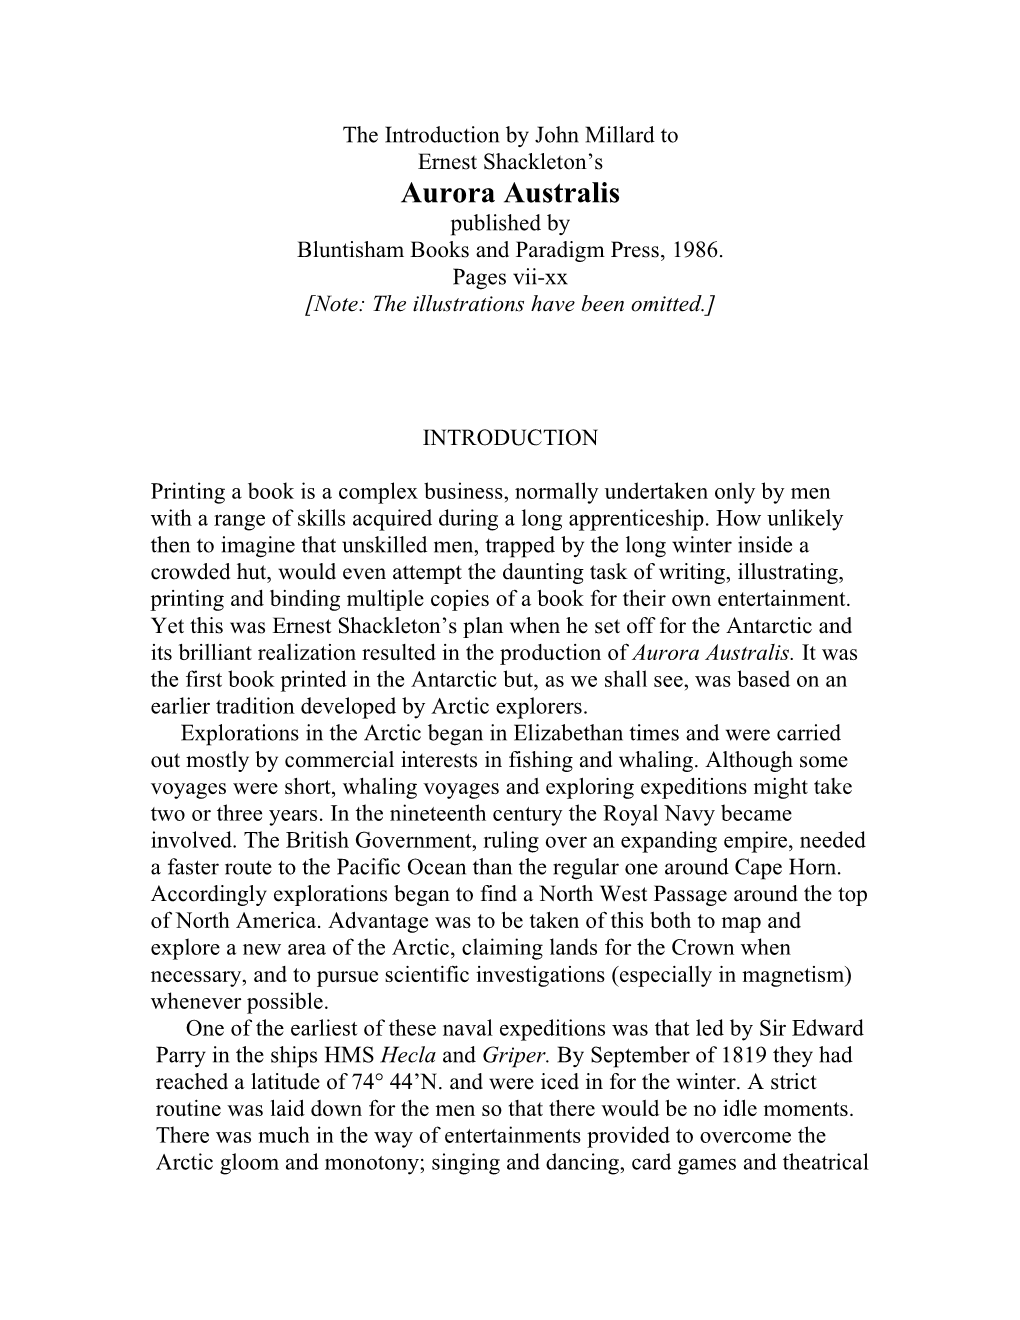 The Introduction to Ernest Shackleton's Aurora Australis